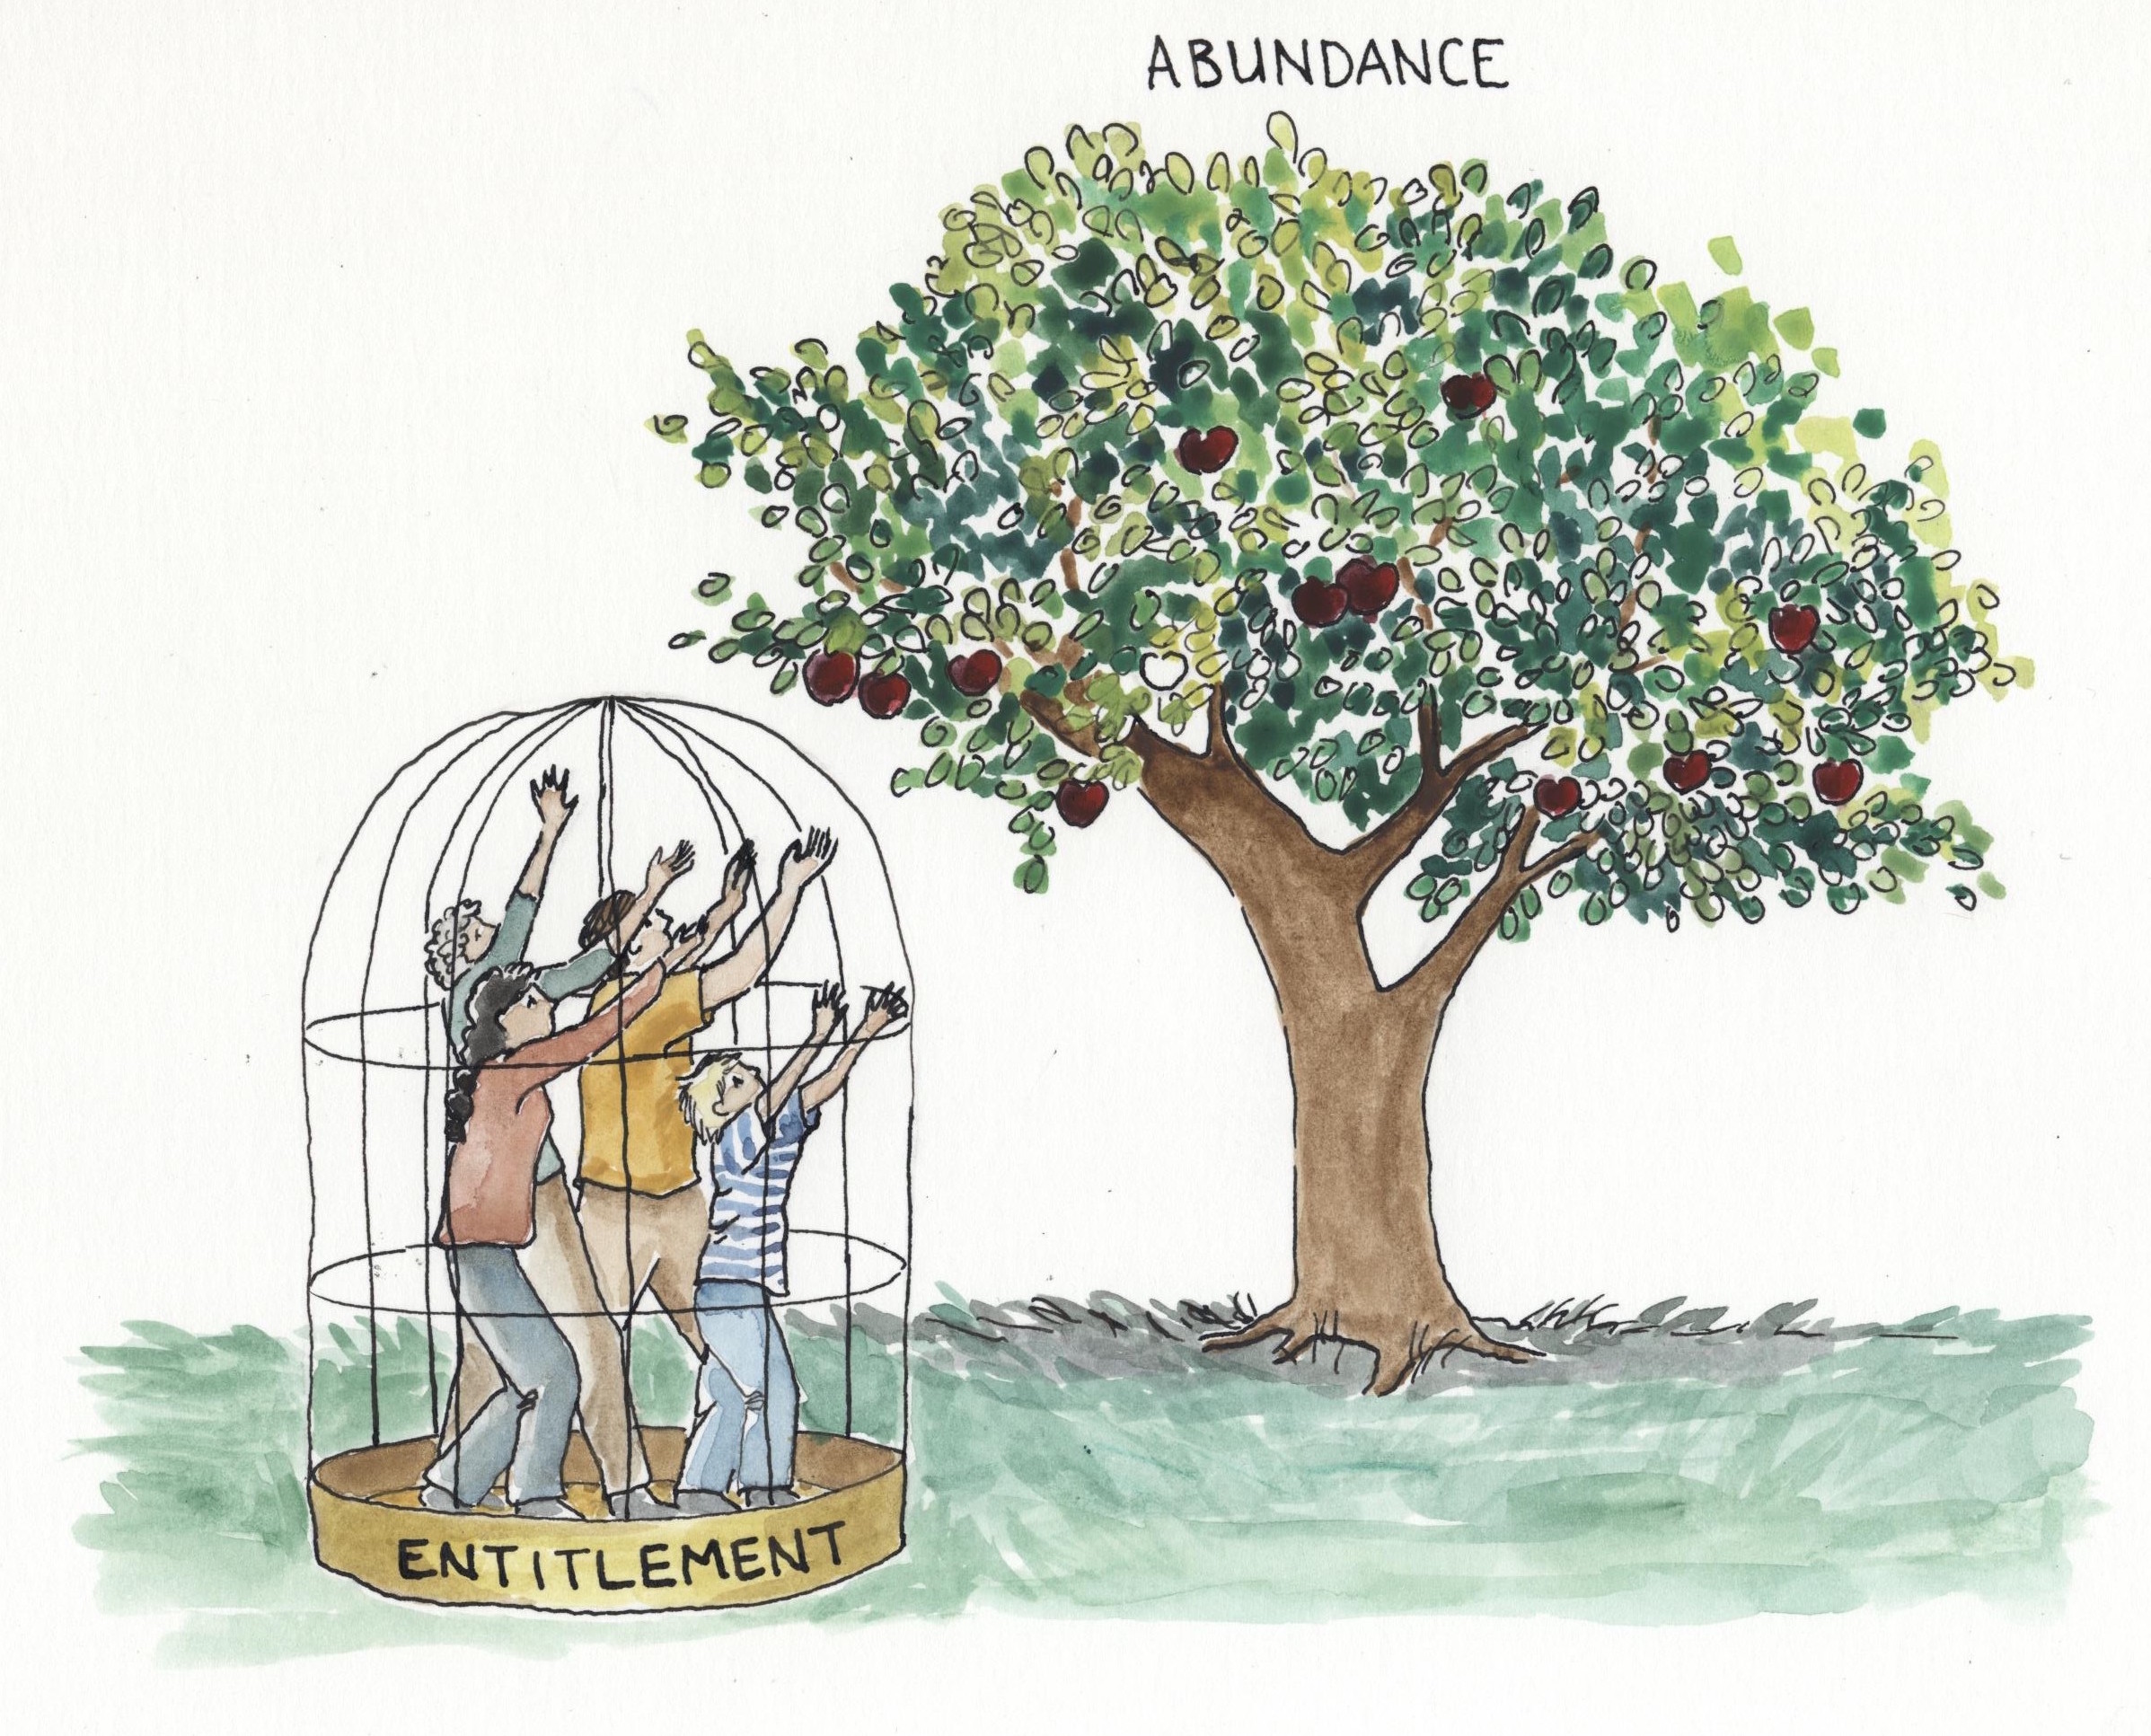 Entitlement vs. Abundance, Doug Andrew